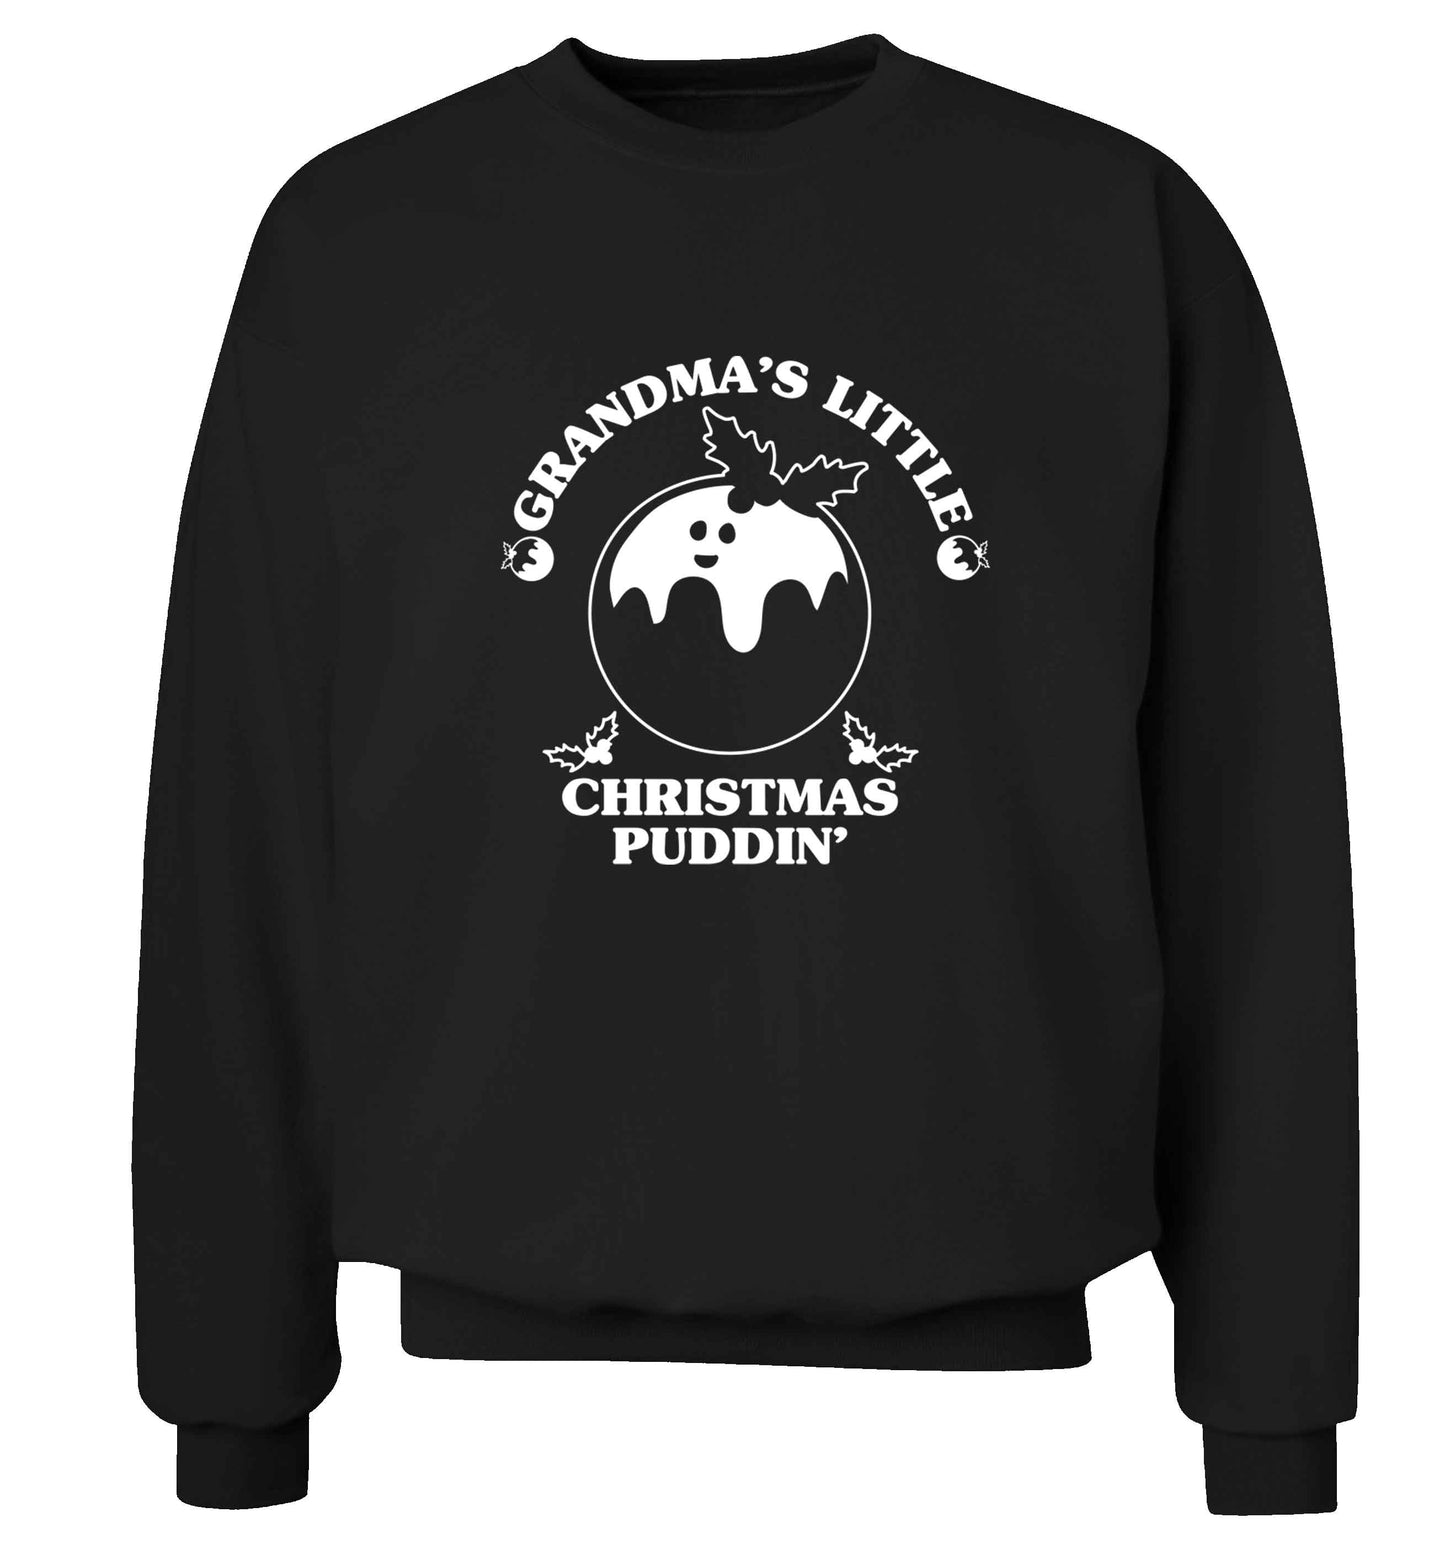 Grandma's little Christmas puddin' Adult's unisex black Sweater 2XL